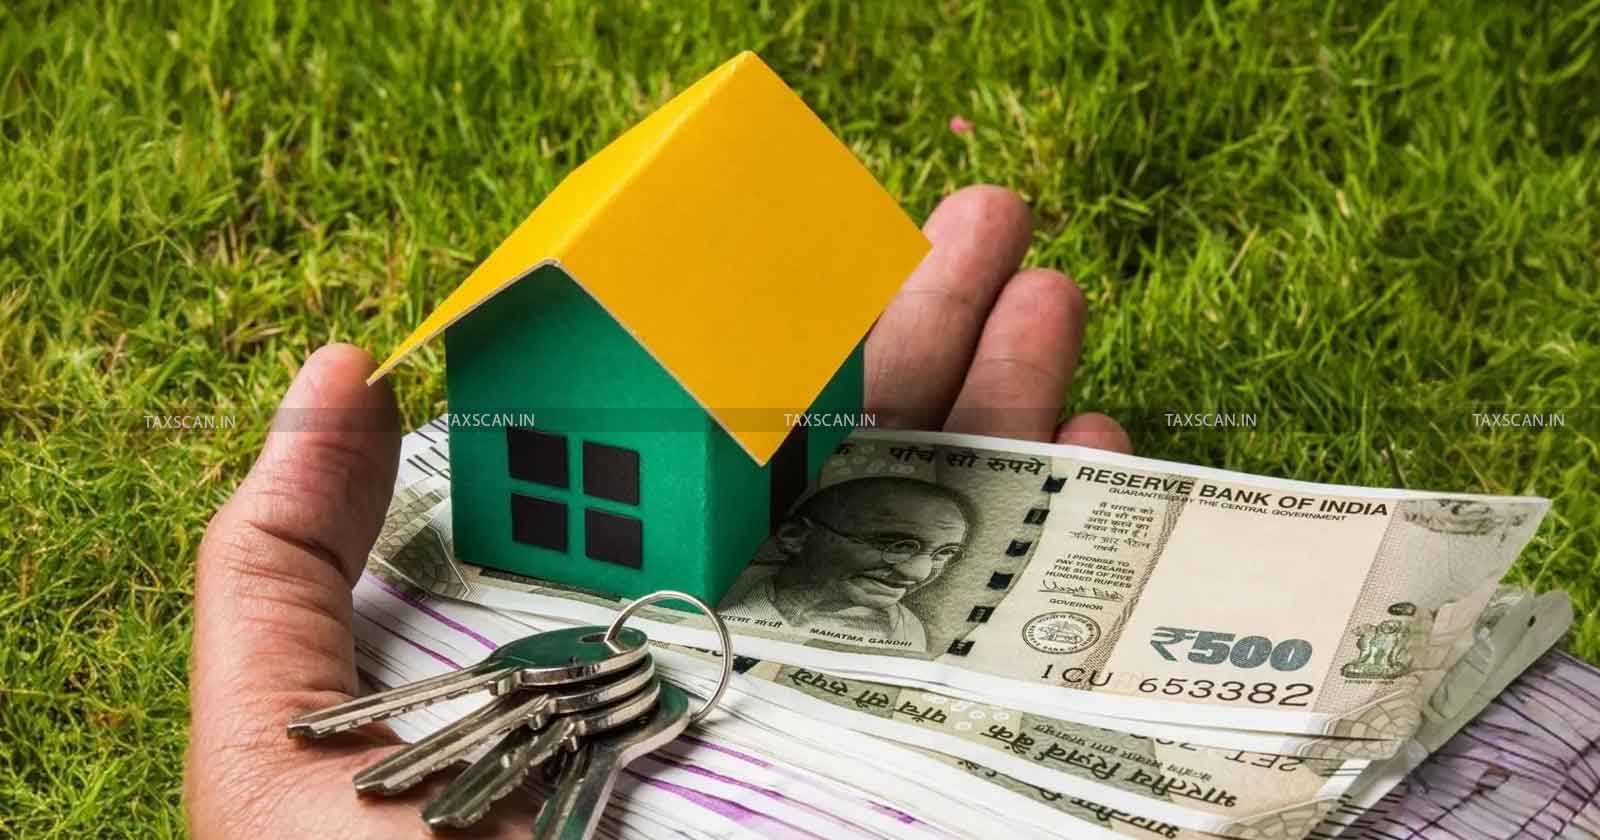 ITAT - ITAT Chennai - Income tax - Sale of Property - Property sale income - TAXSCAN